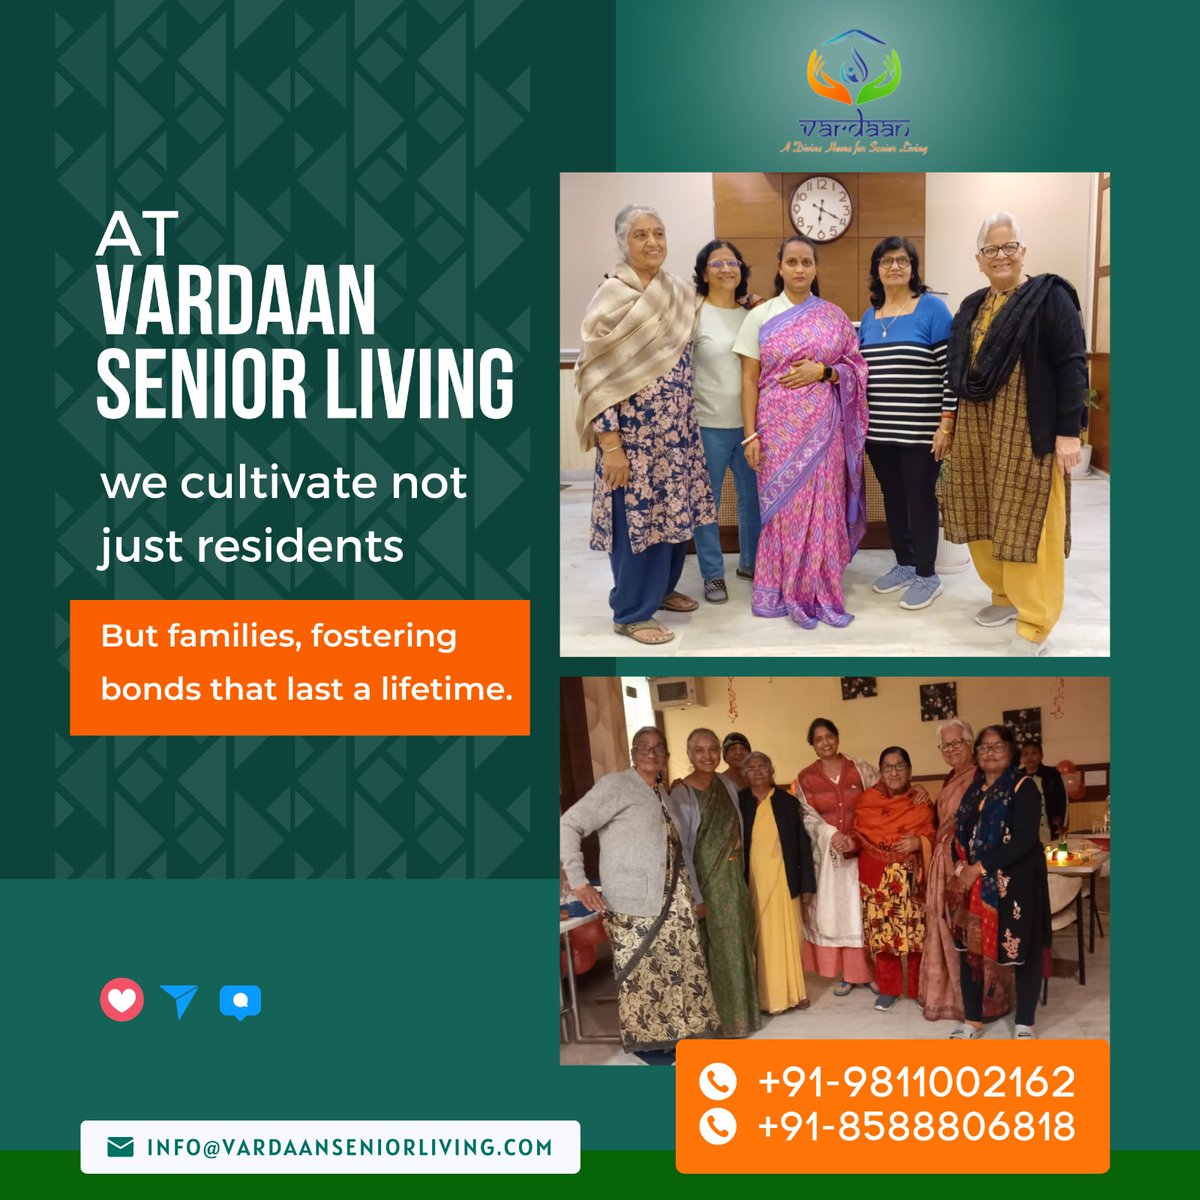 Cultivating Lifelong Bonds at Vardaan Senior Living
At Vardaan Senior Living.
For more details
Visit our website- vardaanseniorliving.com
Call @ 9811002162, 8588806818
or mail us at info@vardaanseniorliving.com

#Vardaanseniorliving #elderlycare #SeniorLivingIndia  #ActiveAging